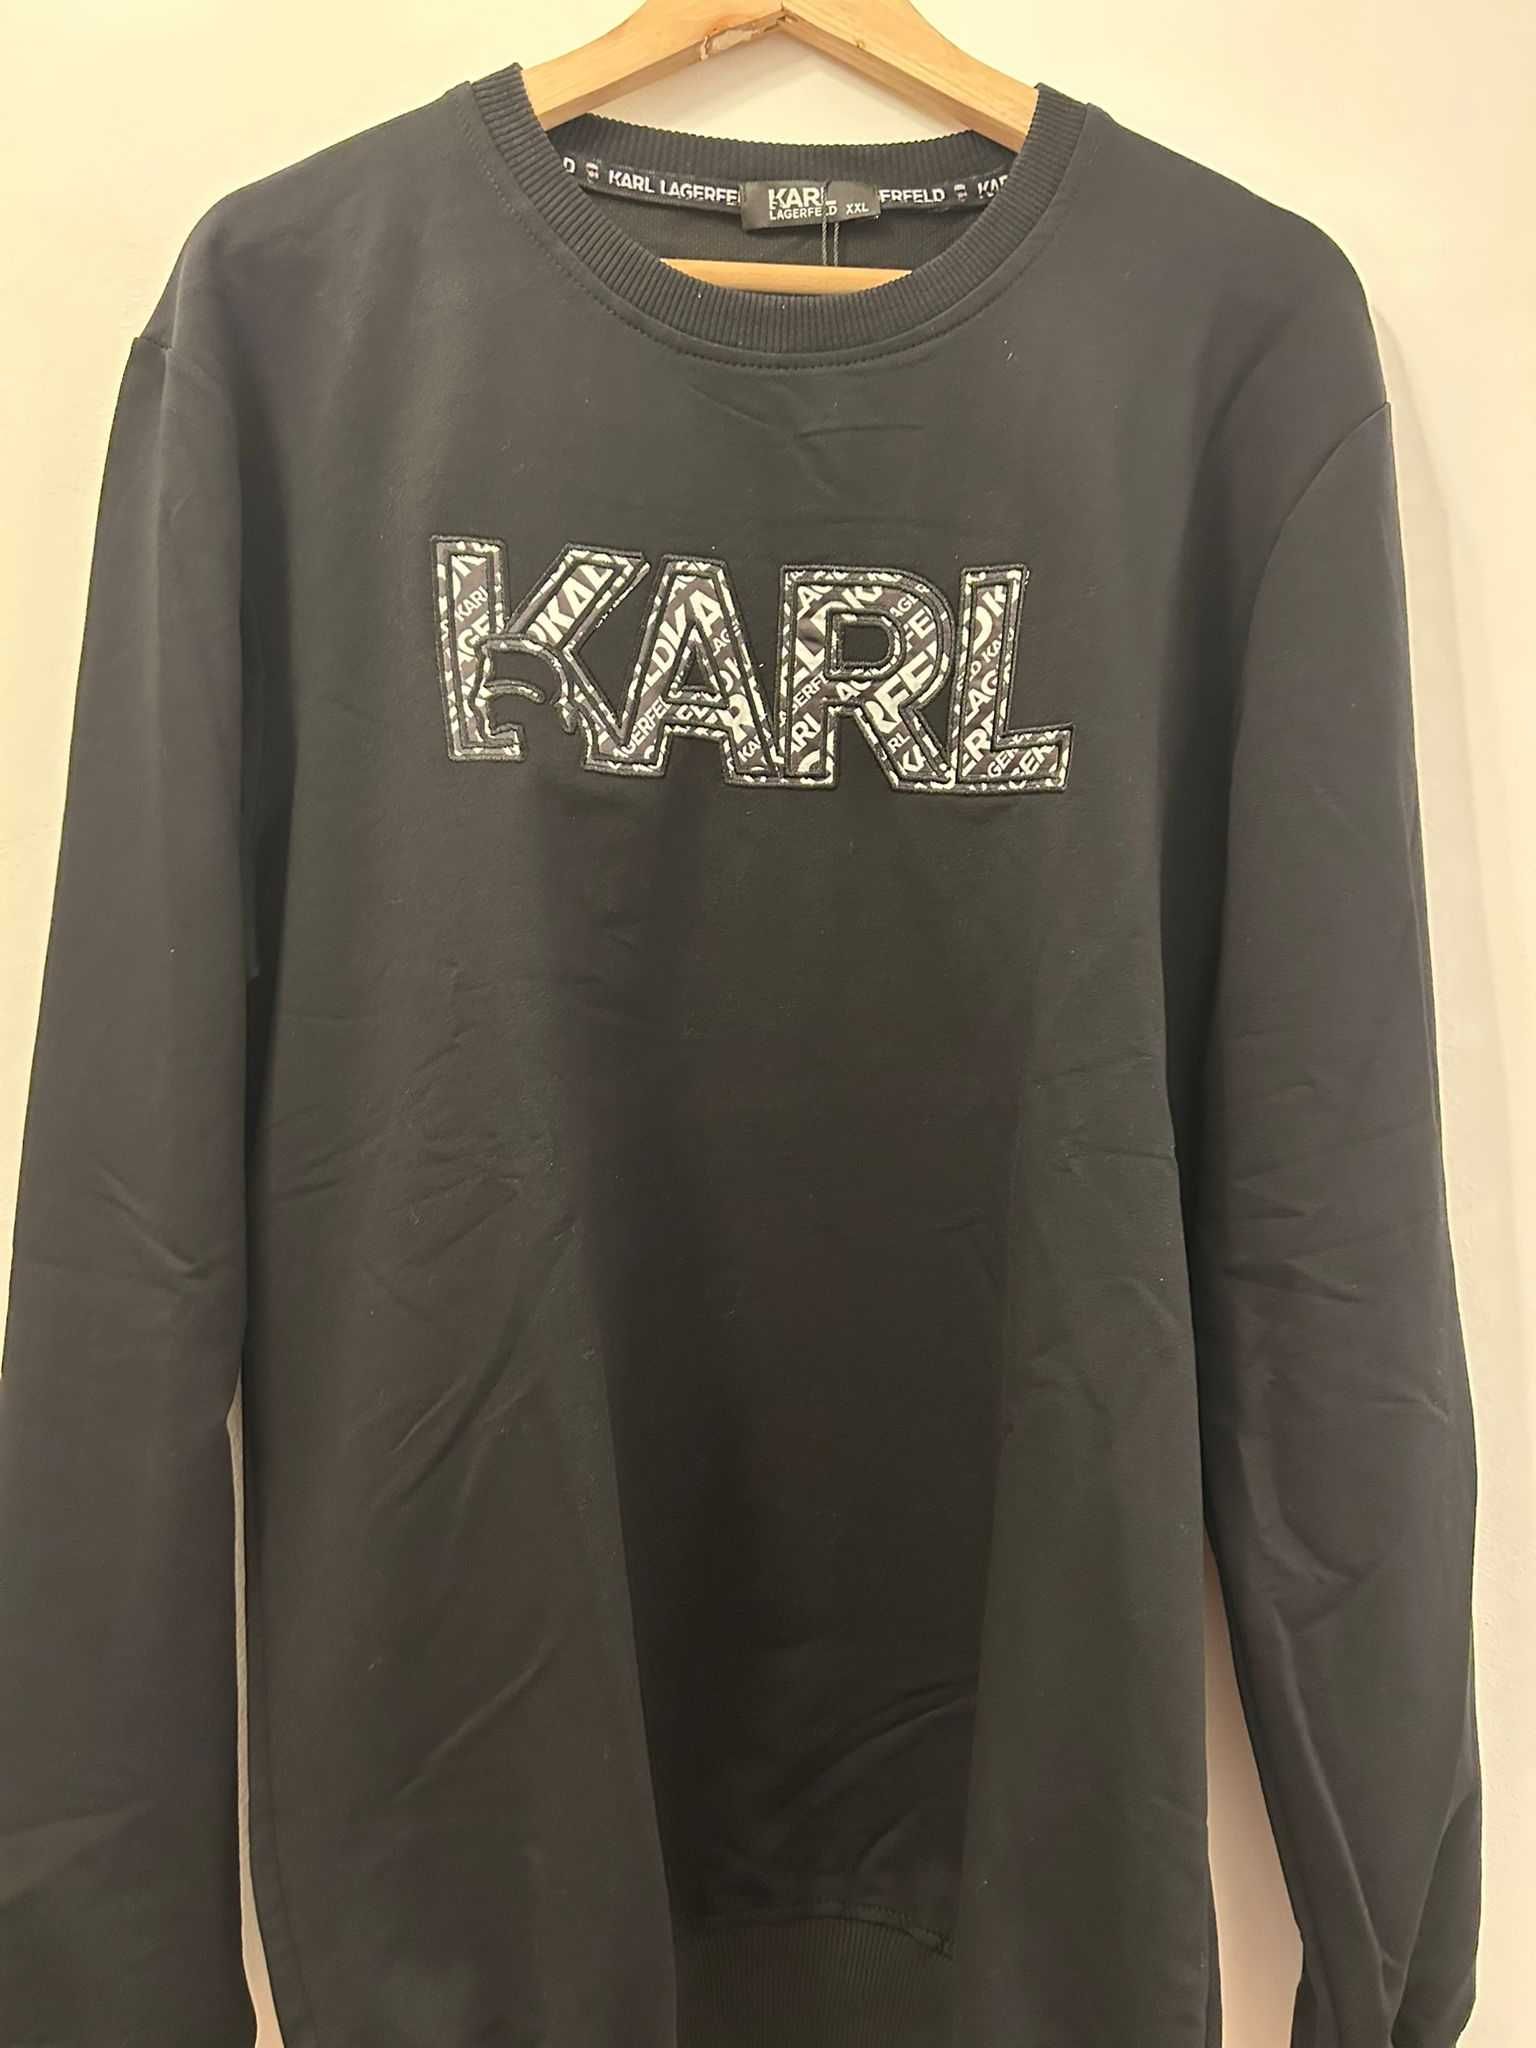 Pulover Karl Lagerfeld, Imprimeu Cusut, Calitate , Marimea S, XL